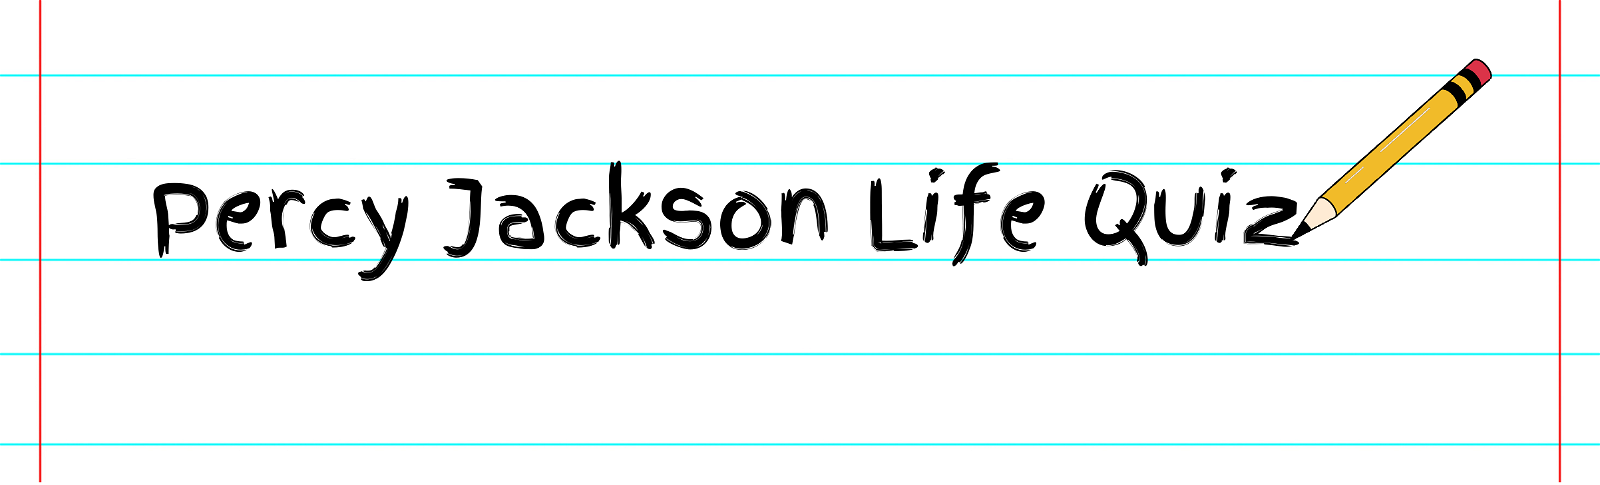 Percy Jackson Life Quiz